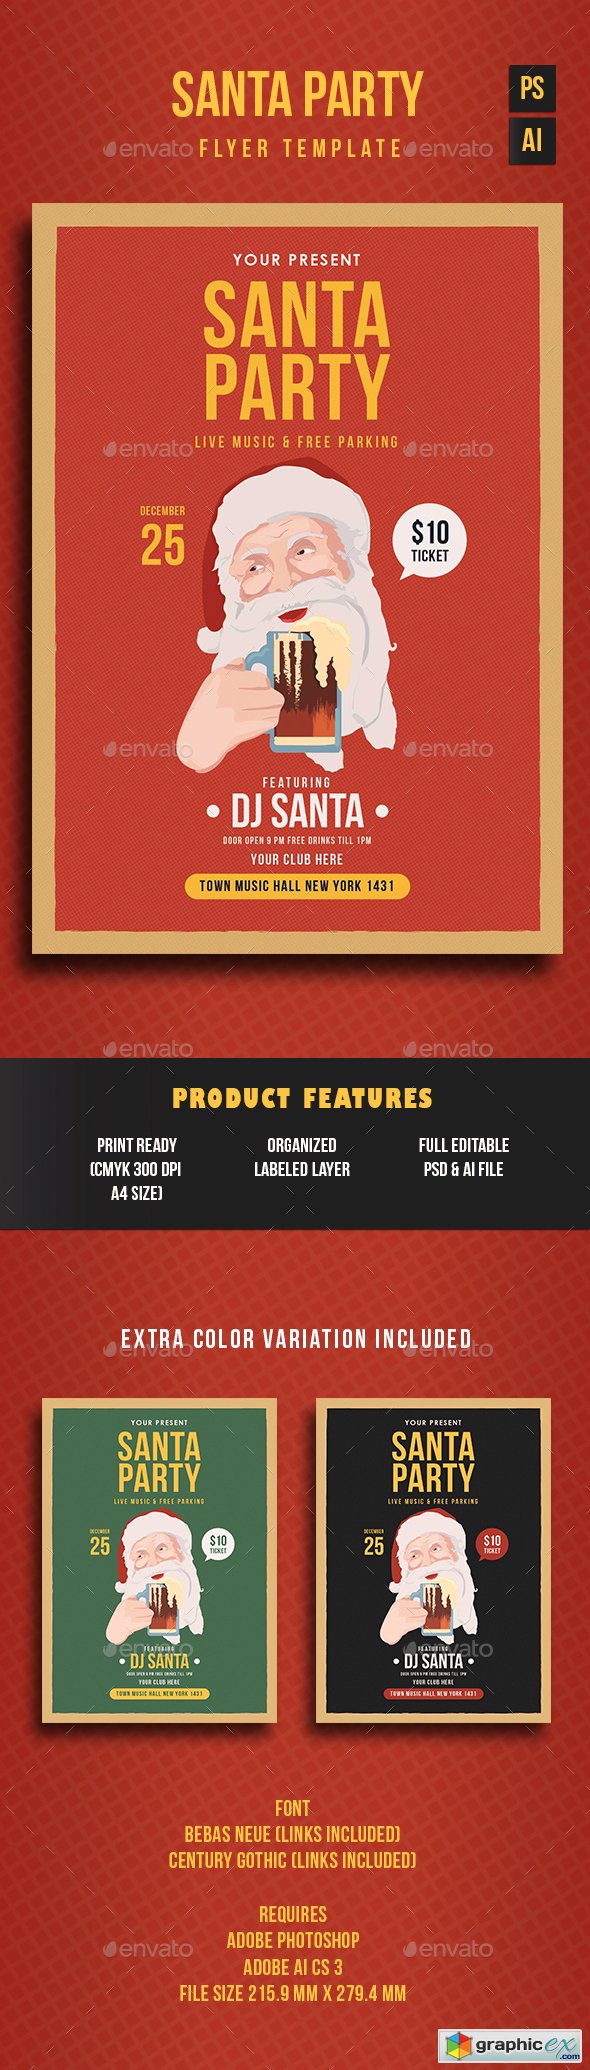 Santa Party Flyer Template